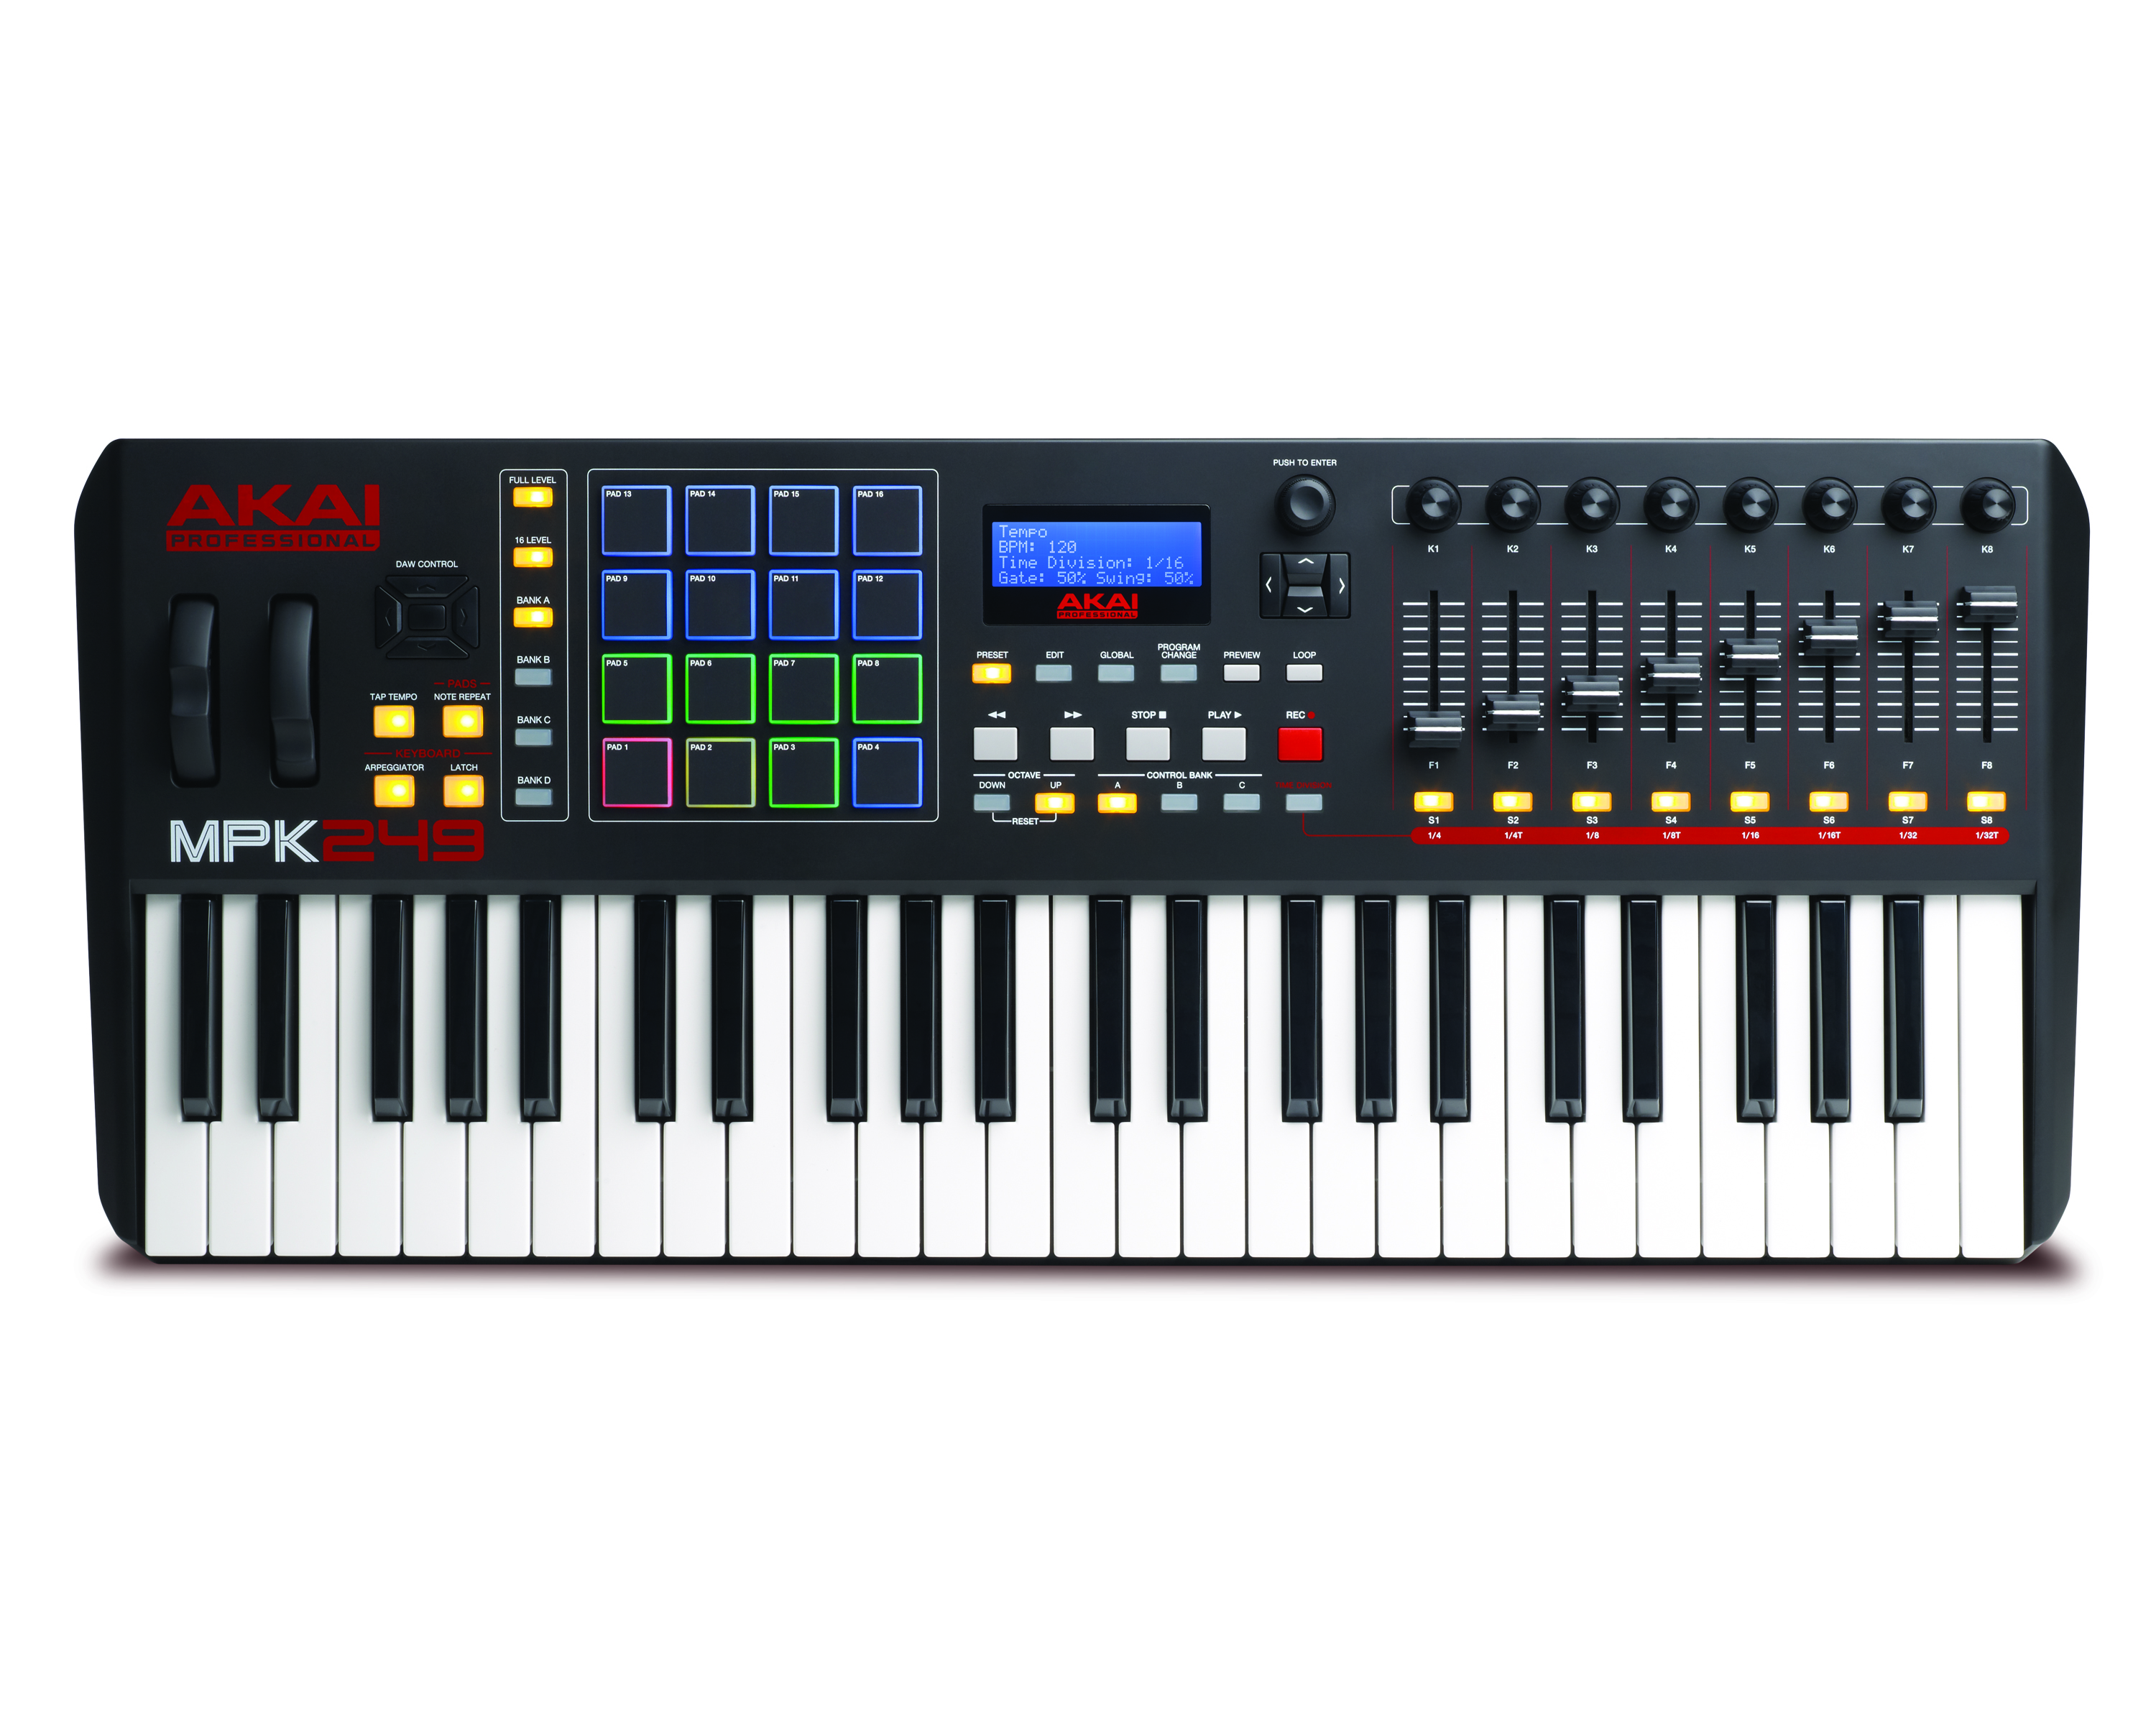 Køb Akai MPK 249 MIDI Keyboard - Pris 2949.00 kr.